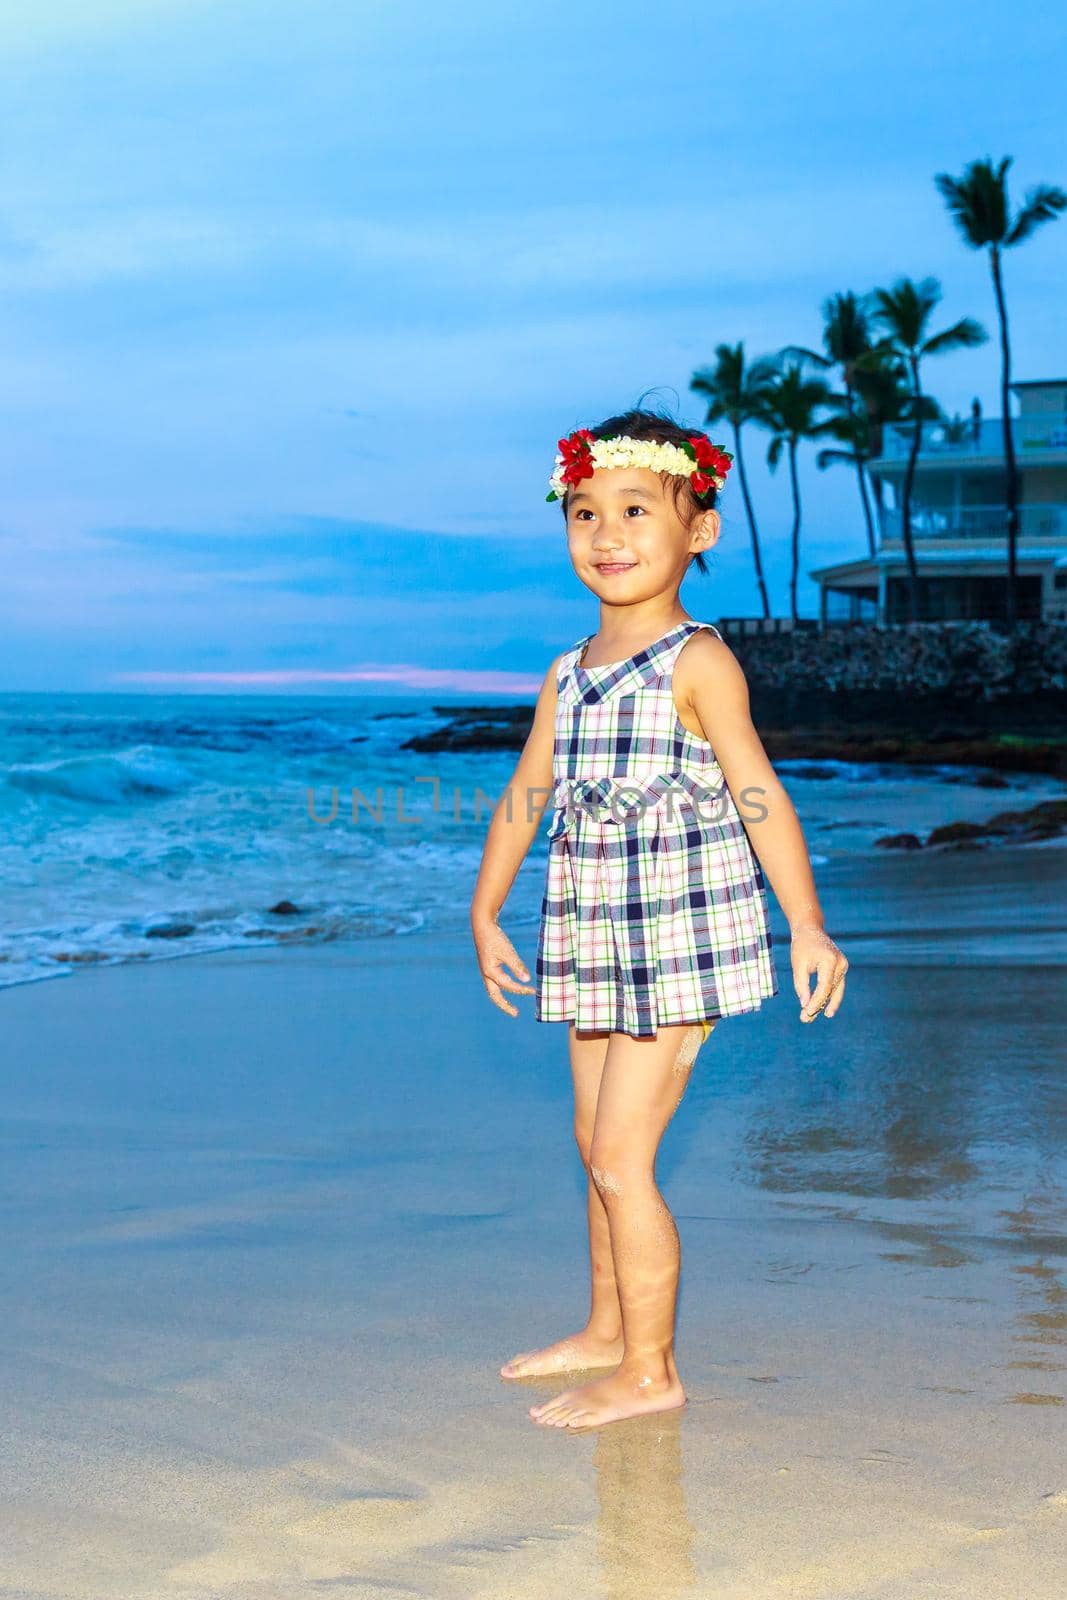 Adorable girl enjoys play time on the beach.